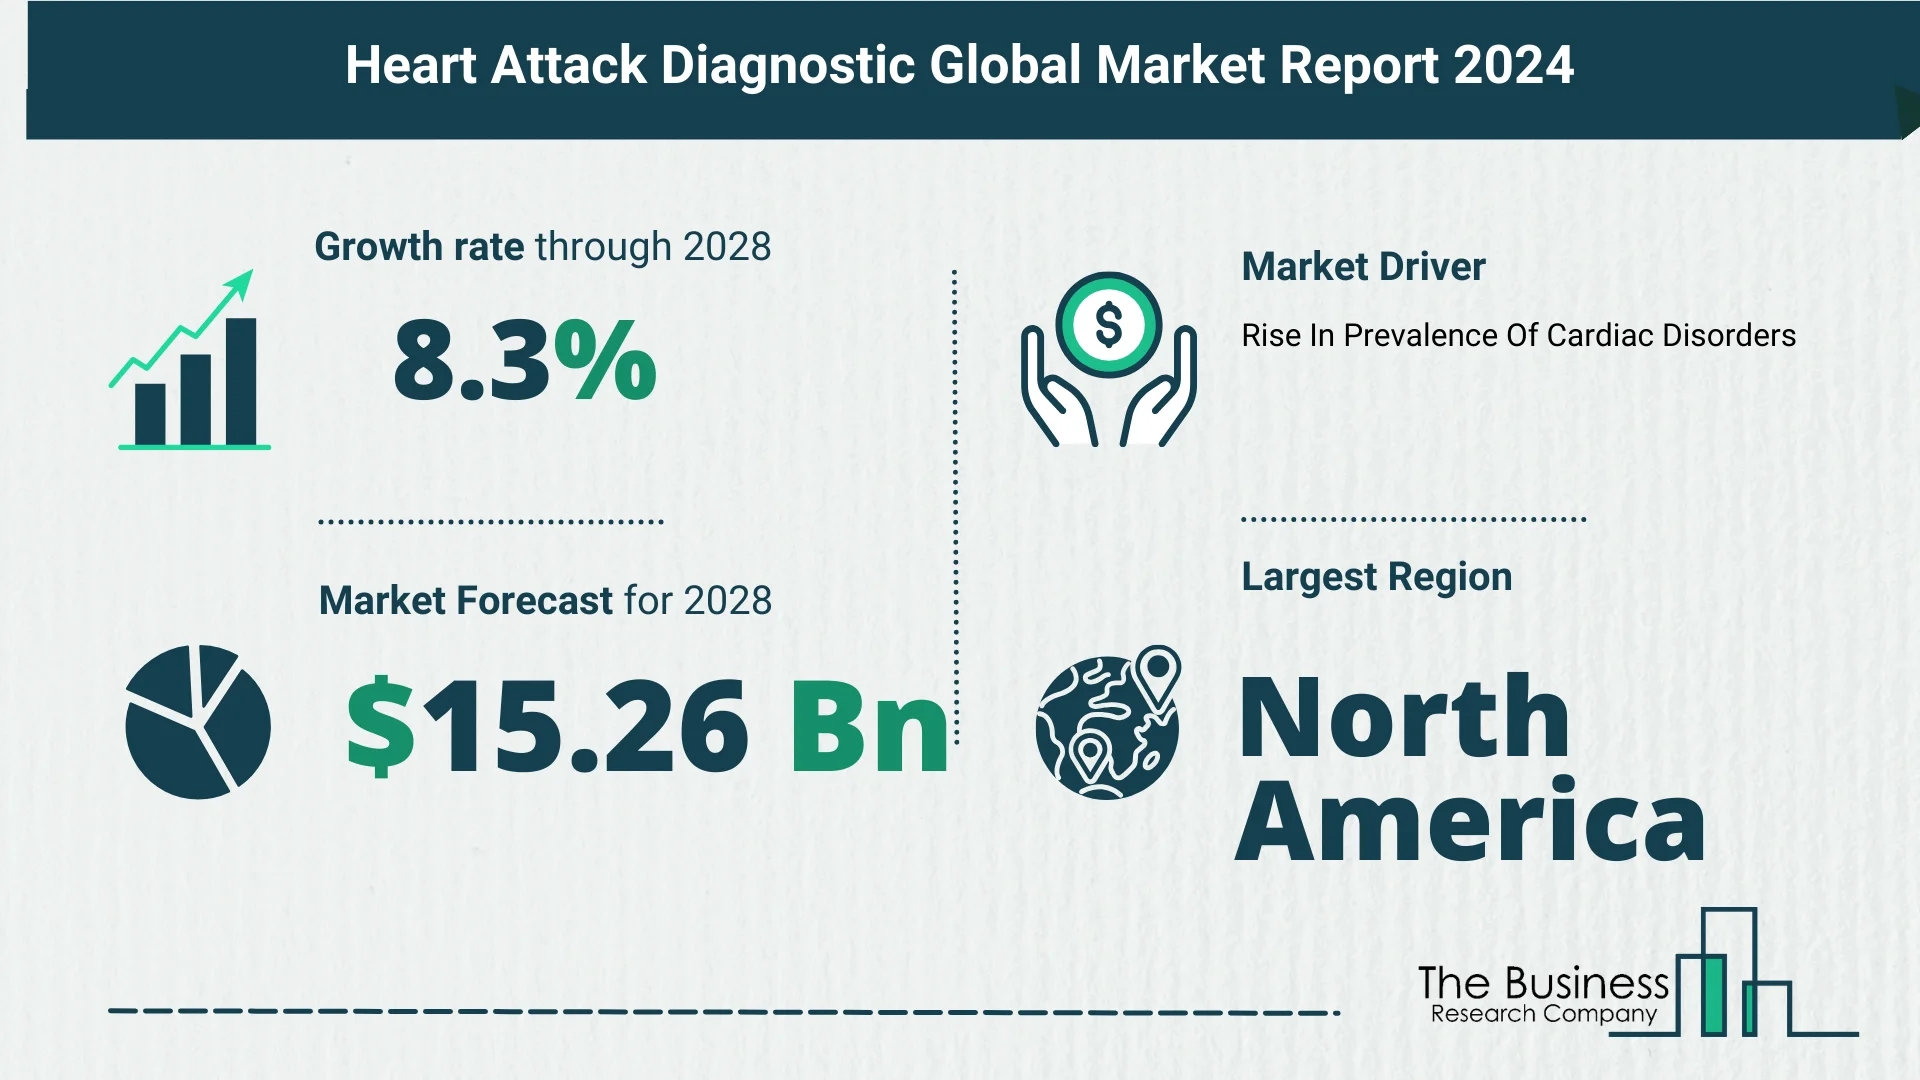 Global Heart Attack Diagnostic Market Size